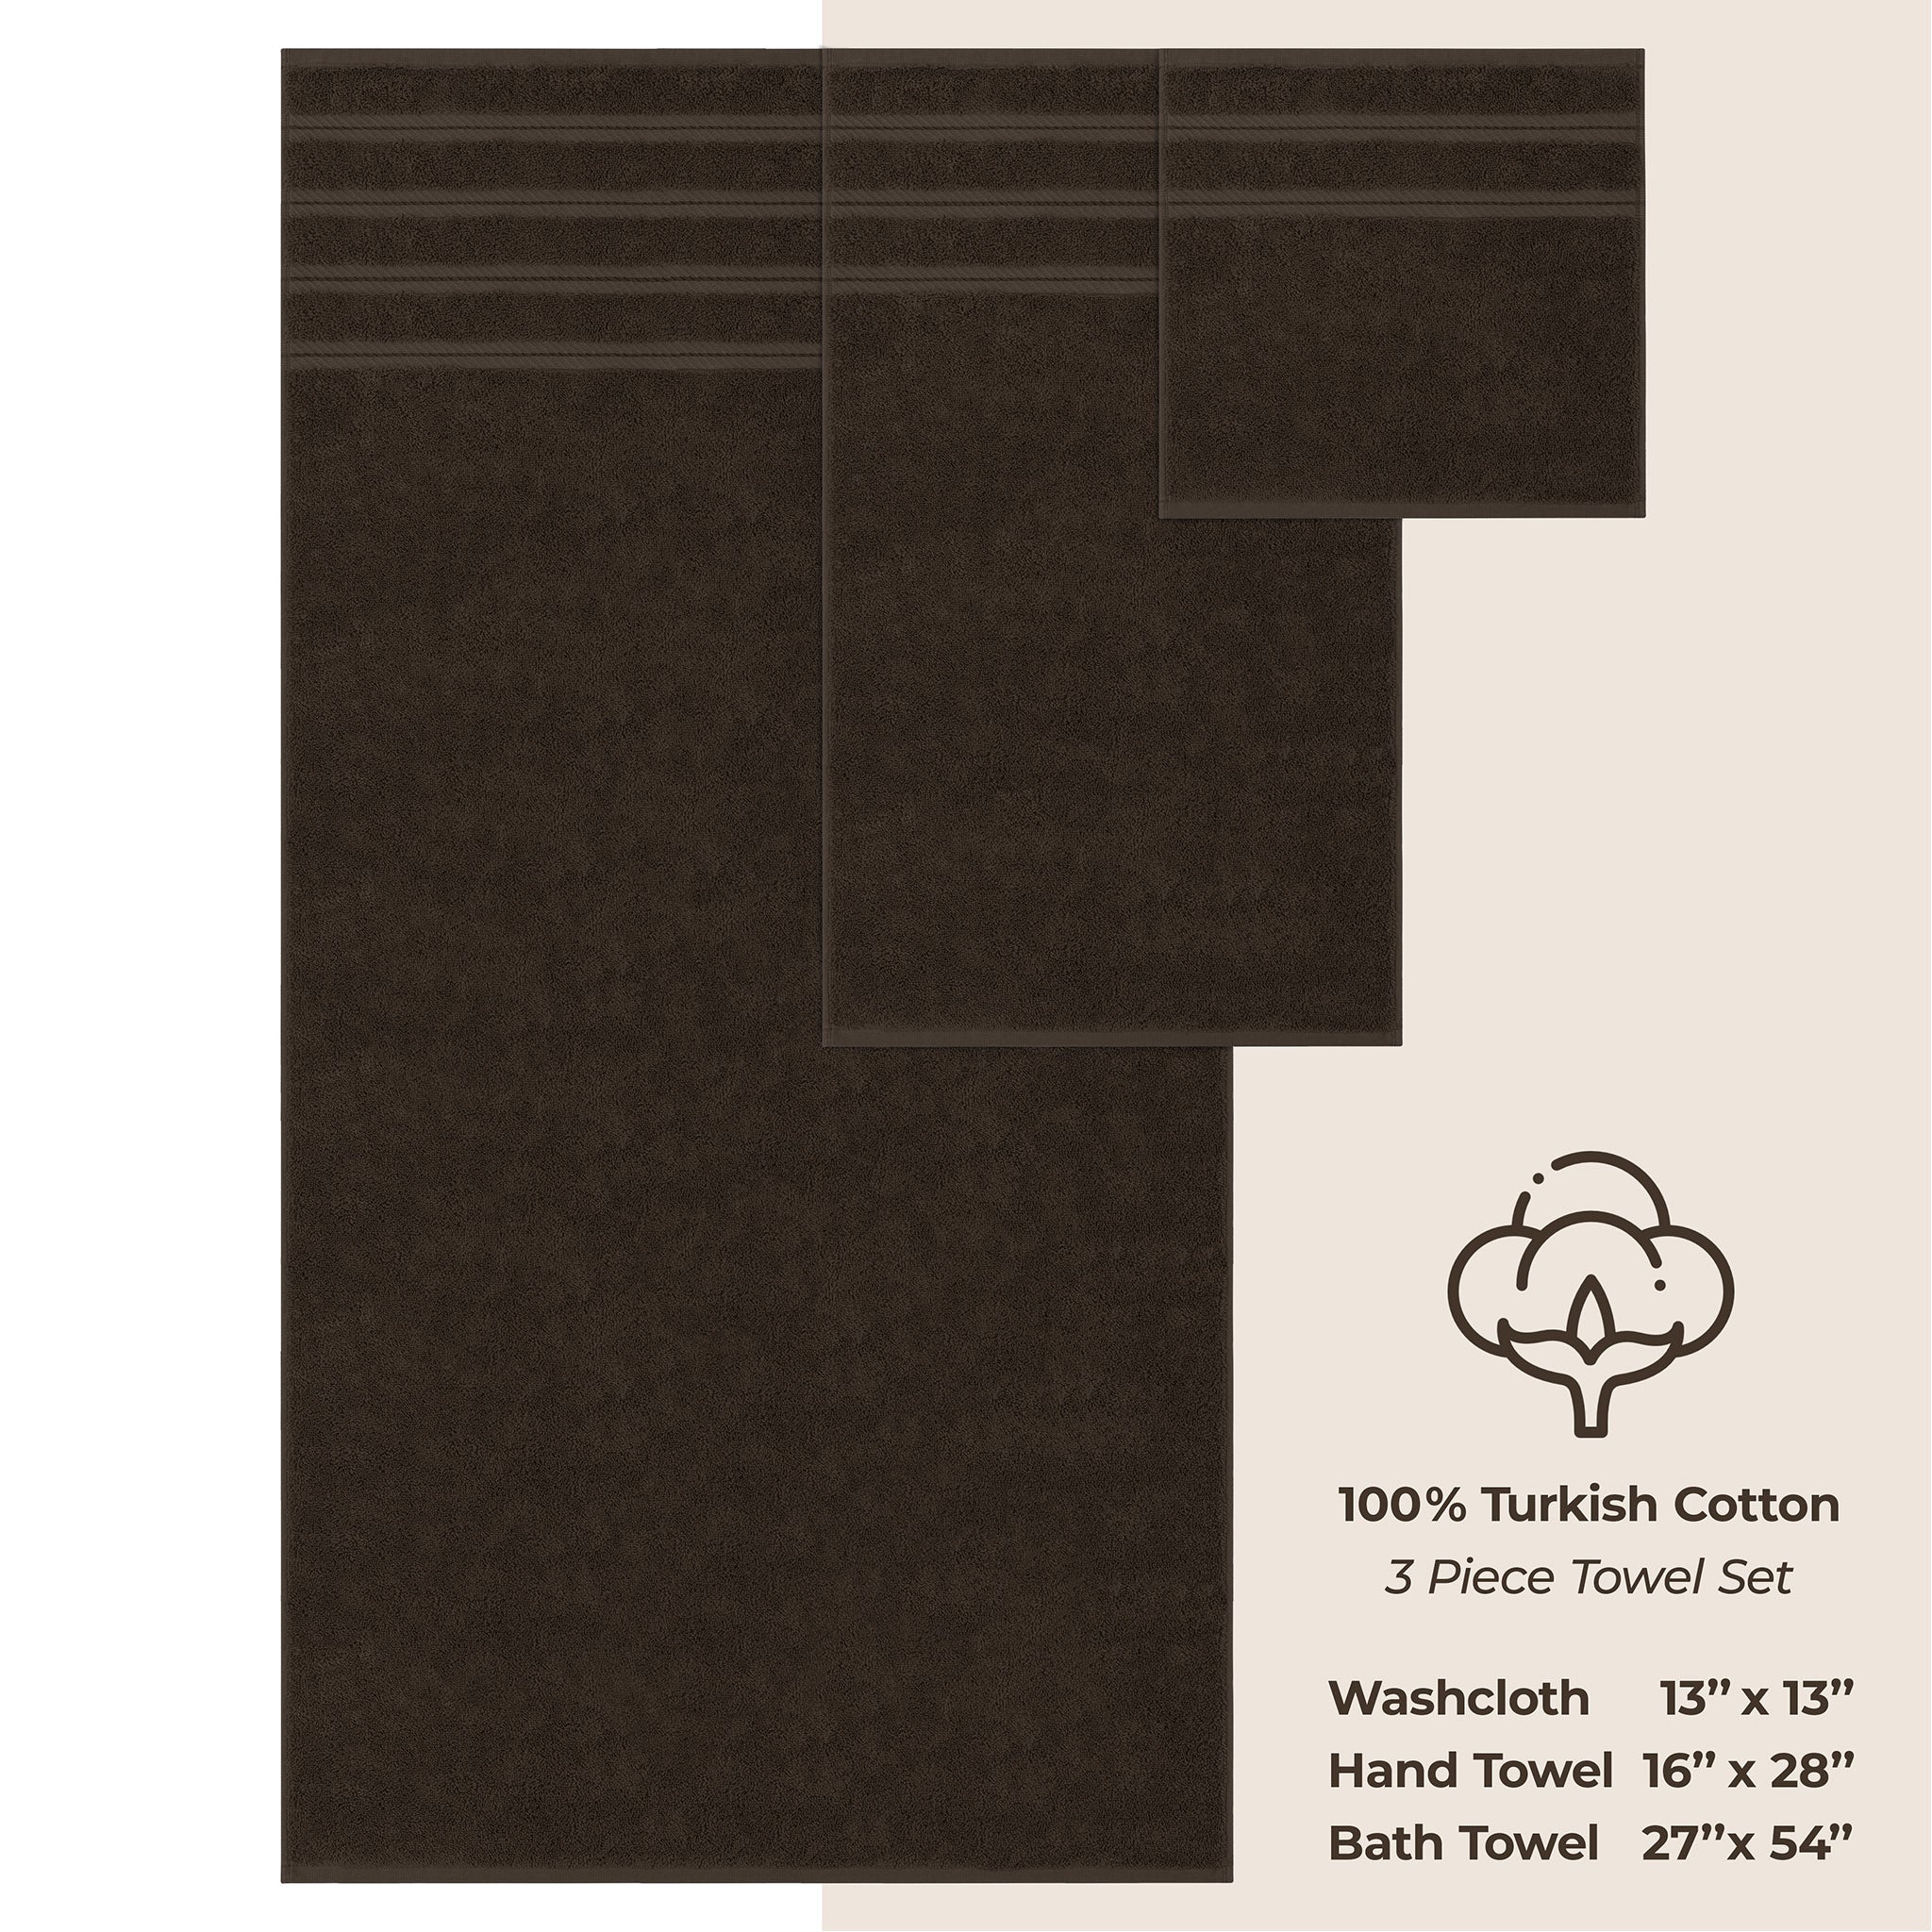 American Soft Linen 3 Piece Luxury Hotel Towel Set 20 set case pack chocolate-brown-4